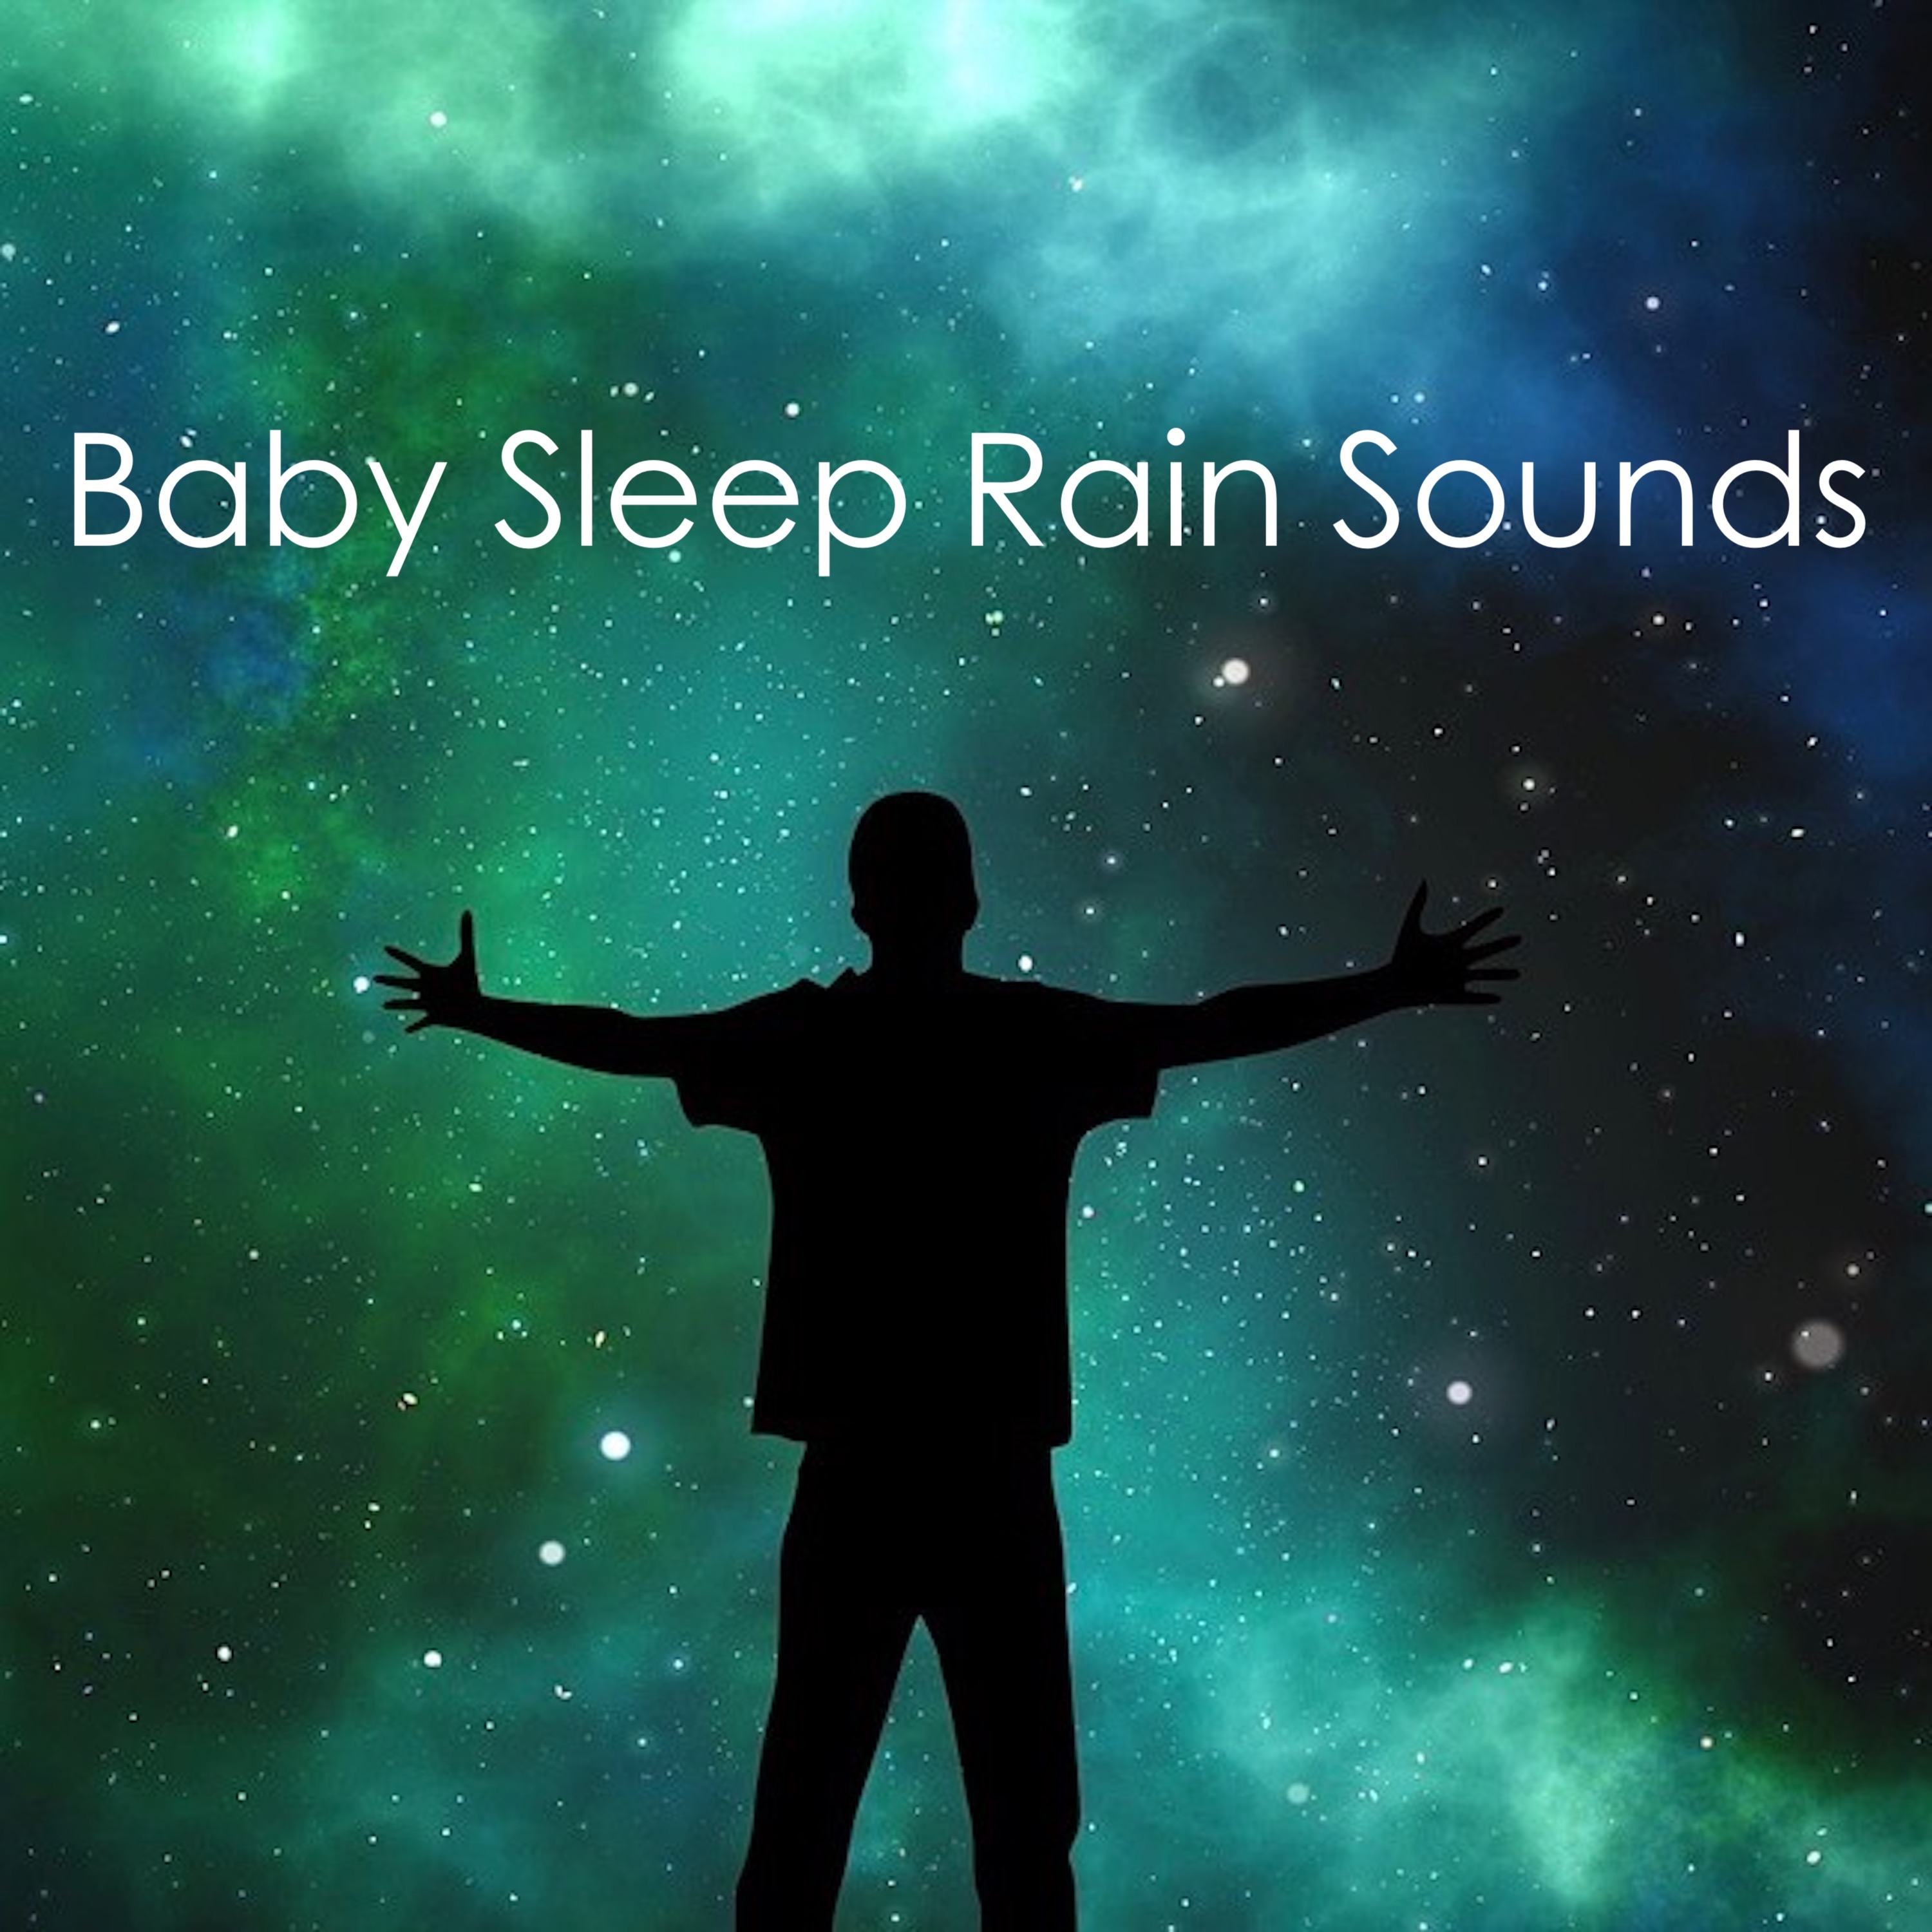 #15 Baby Sleep Rain Sounds - Natural Rain Sounds for Baby Sleep